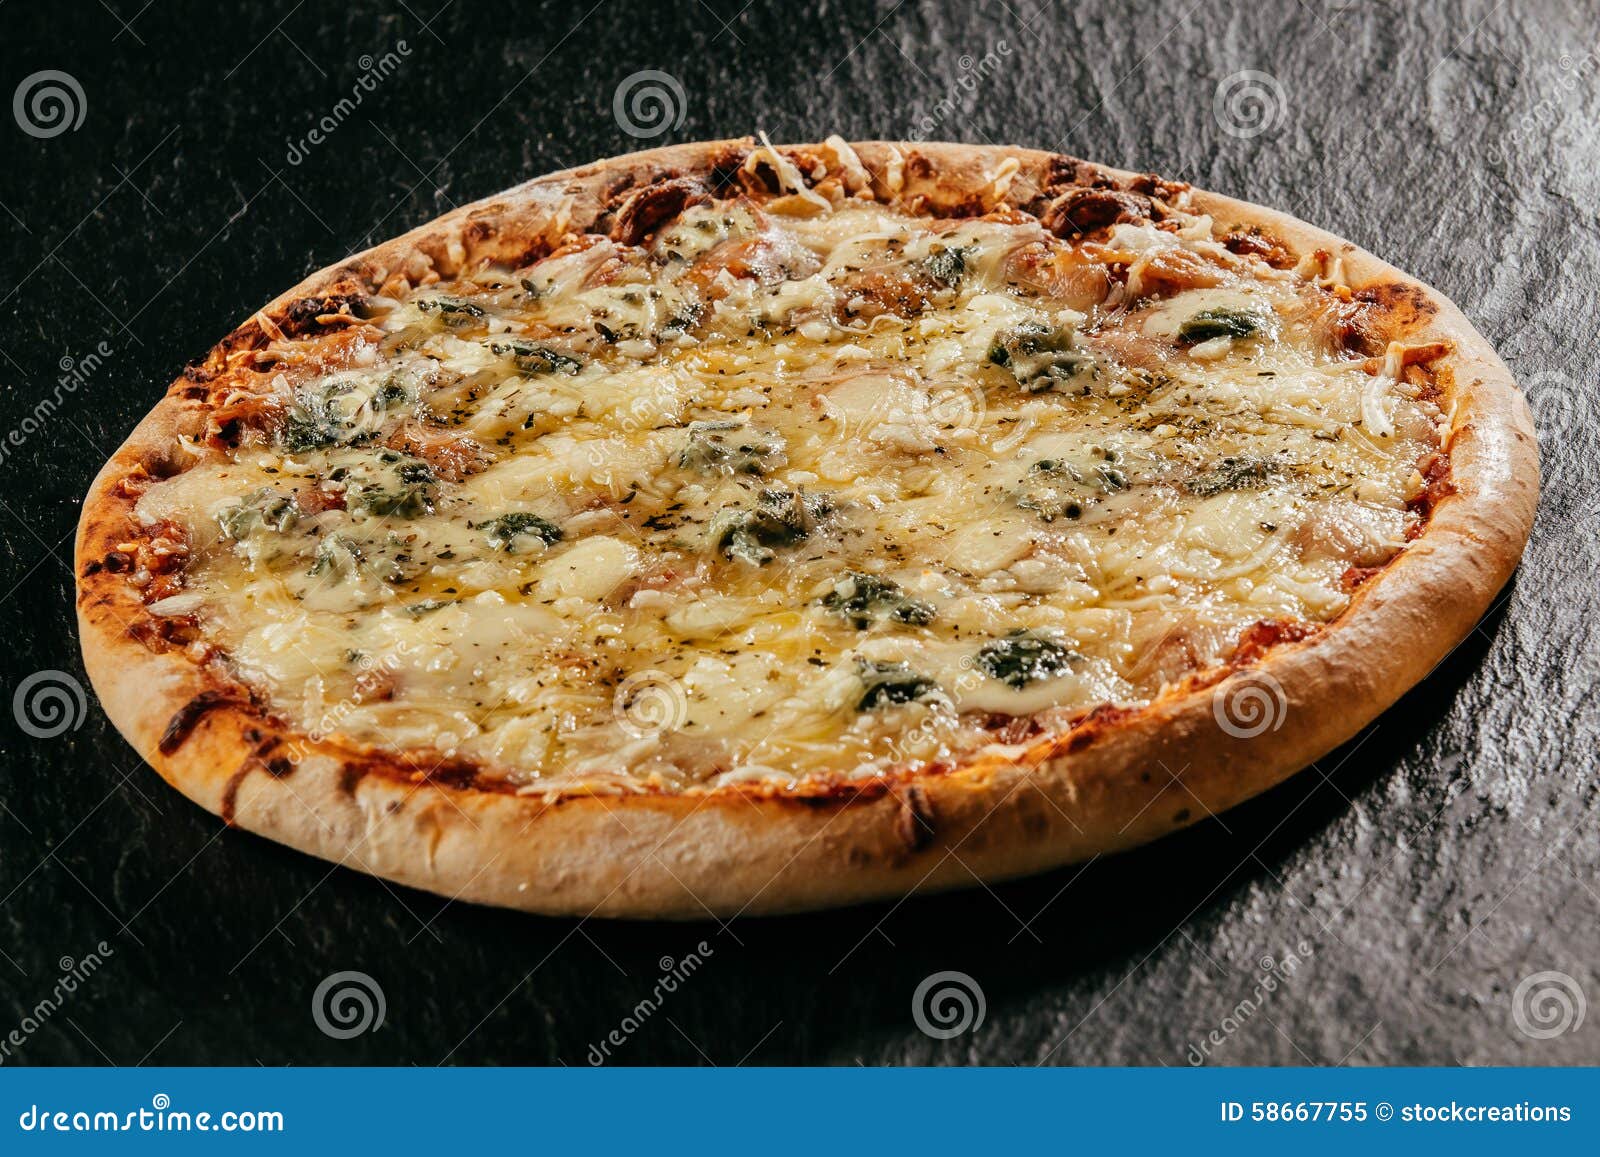 trattoria пицца четыре сыра фото 62